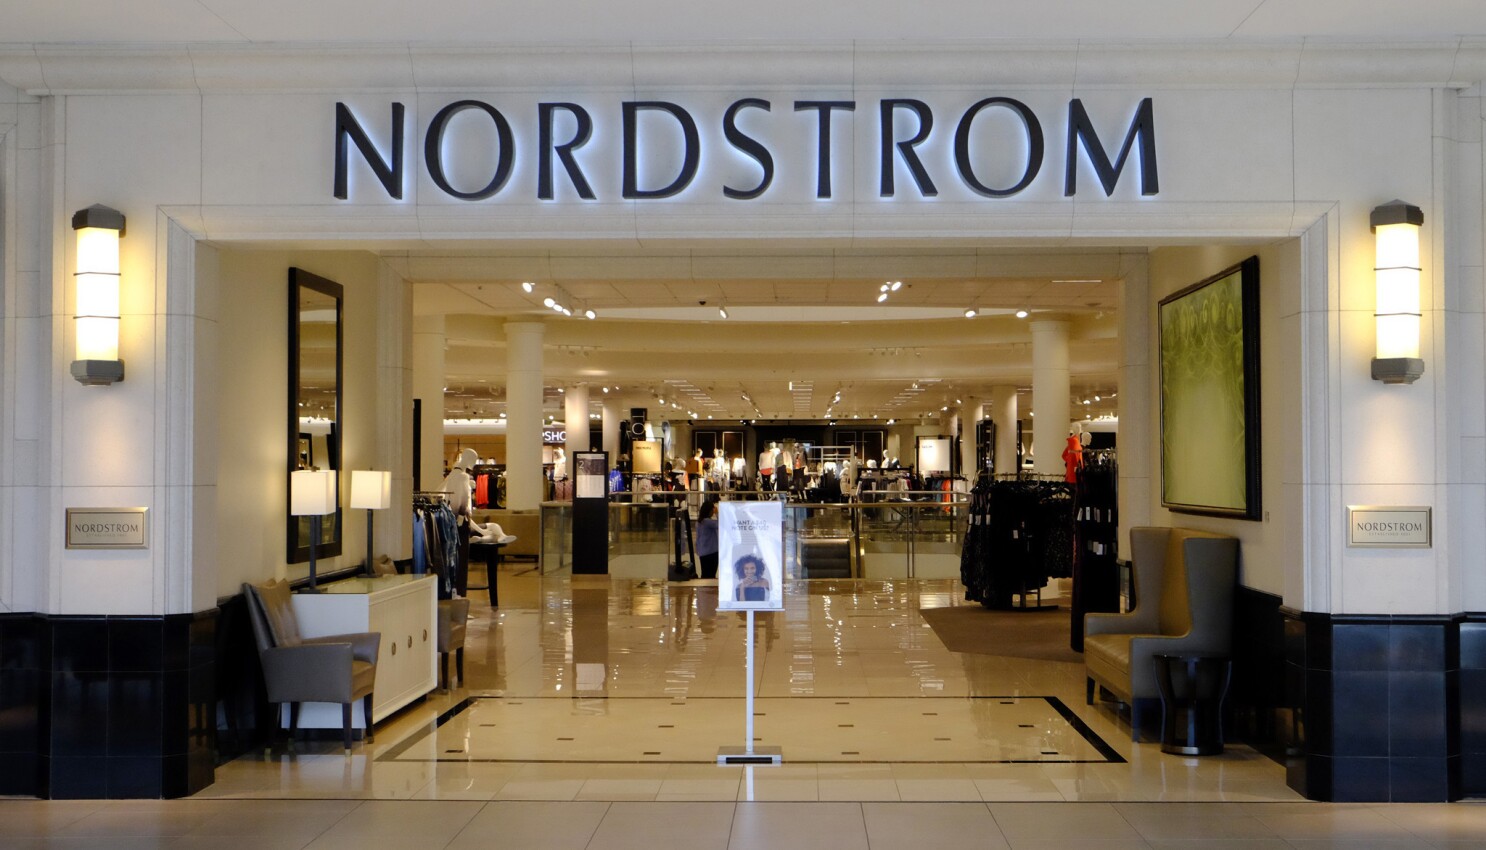 Nordstrom inside the store 